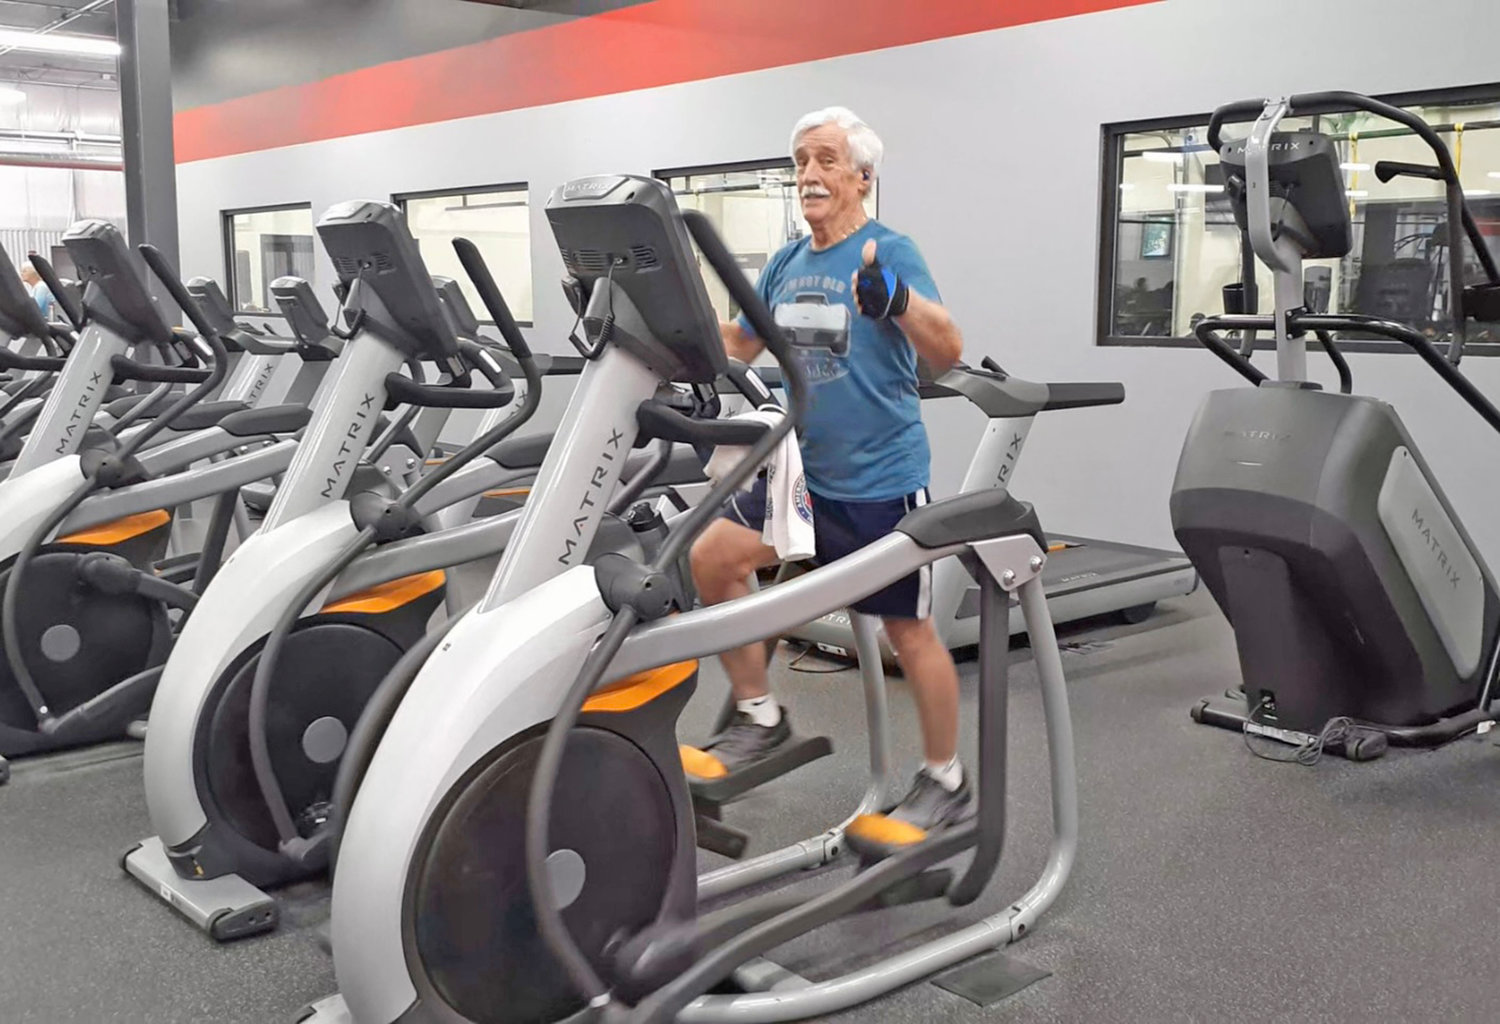 Grandmaster Clifford Crandall has fun on the elliptical machine at his local gym, a good cardio workout.